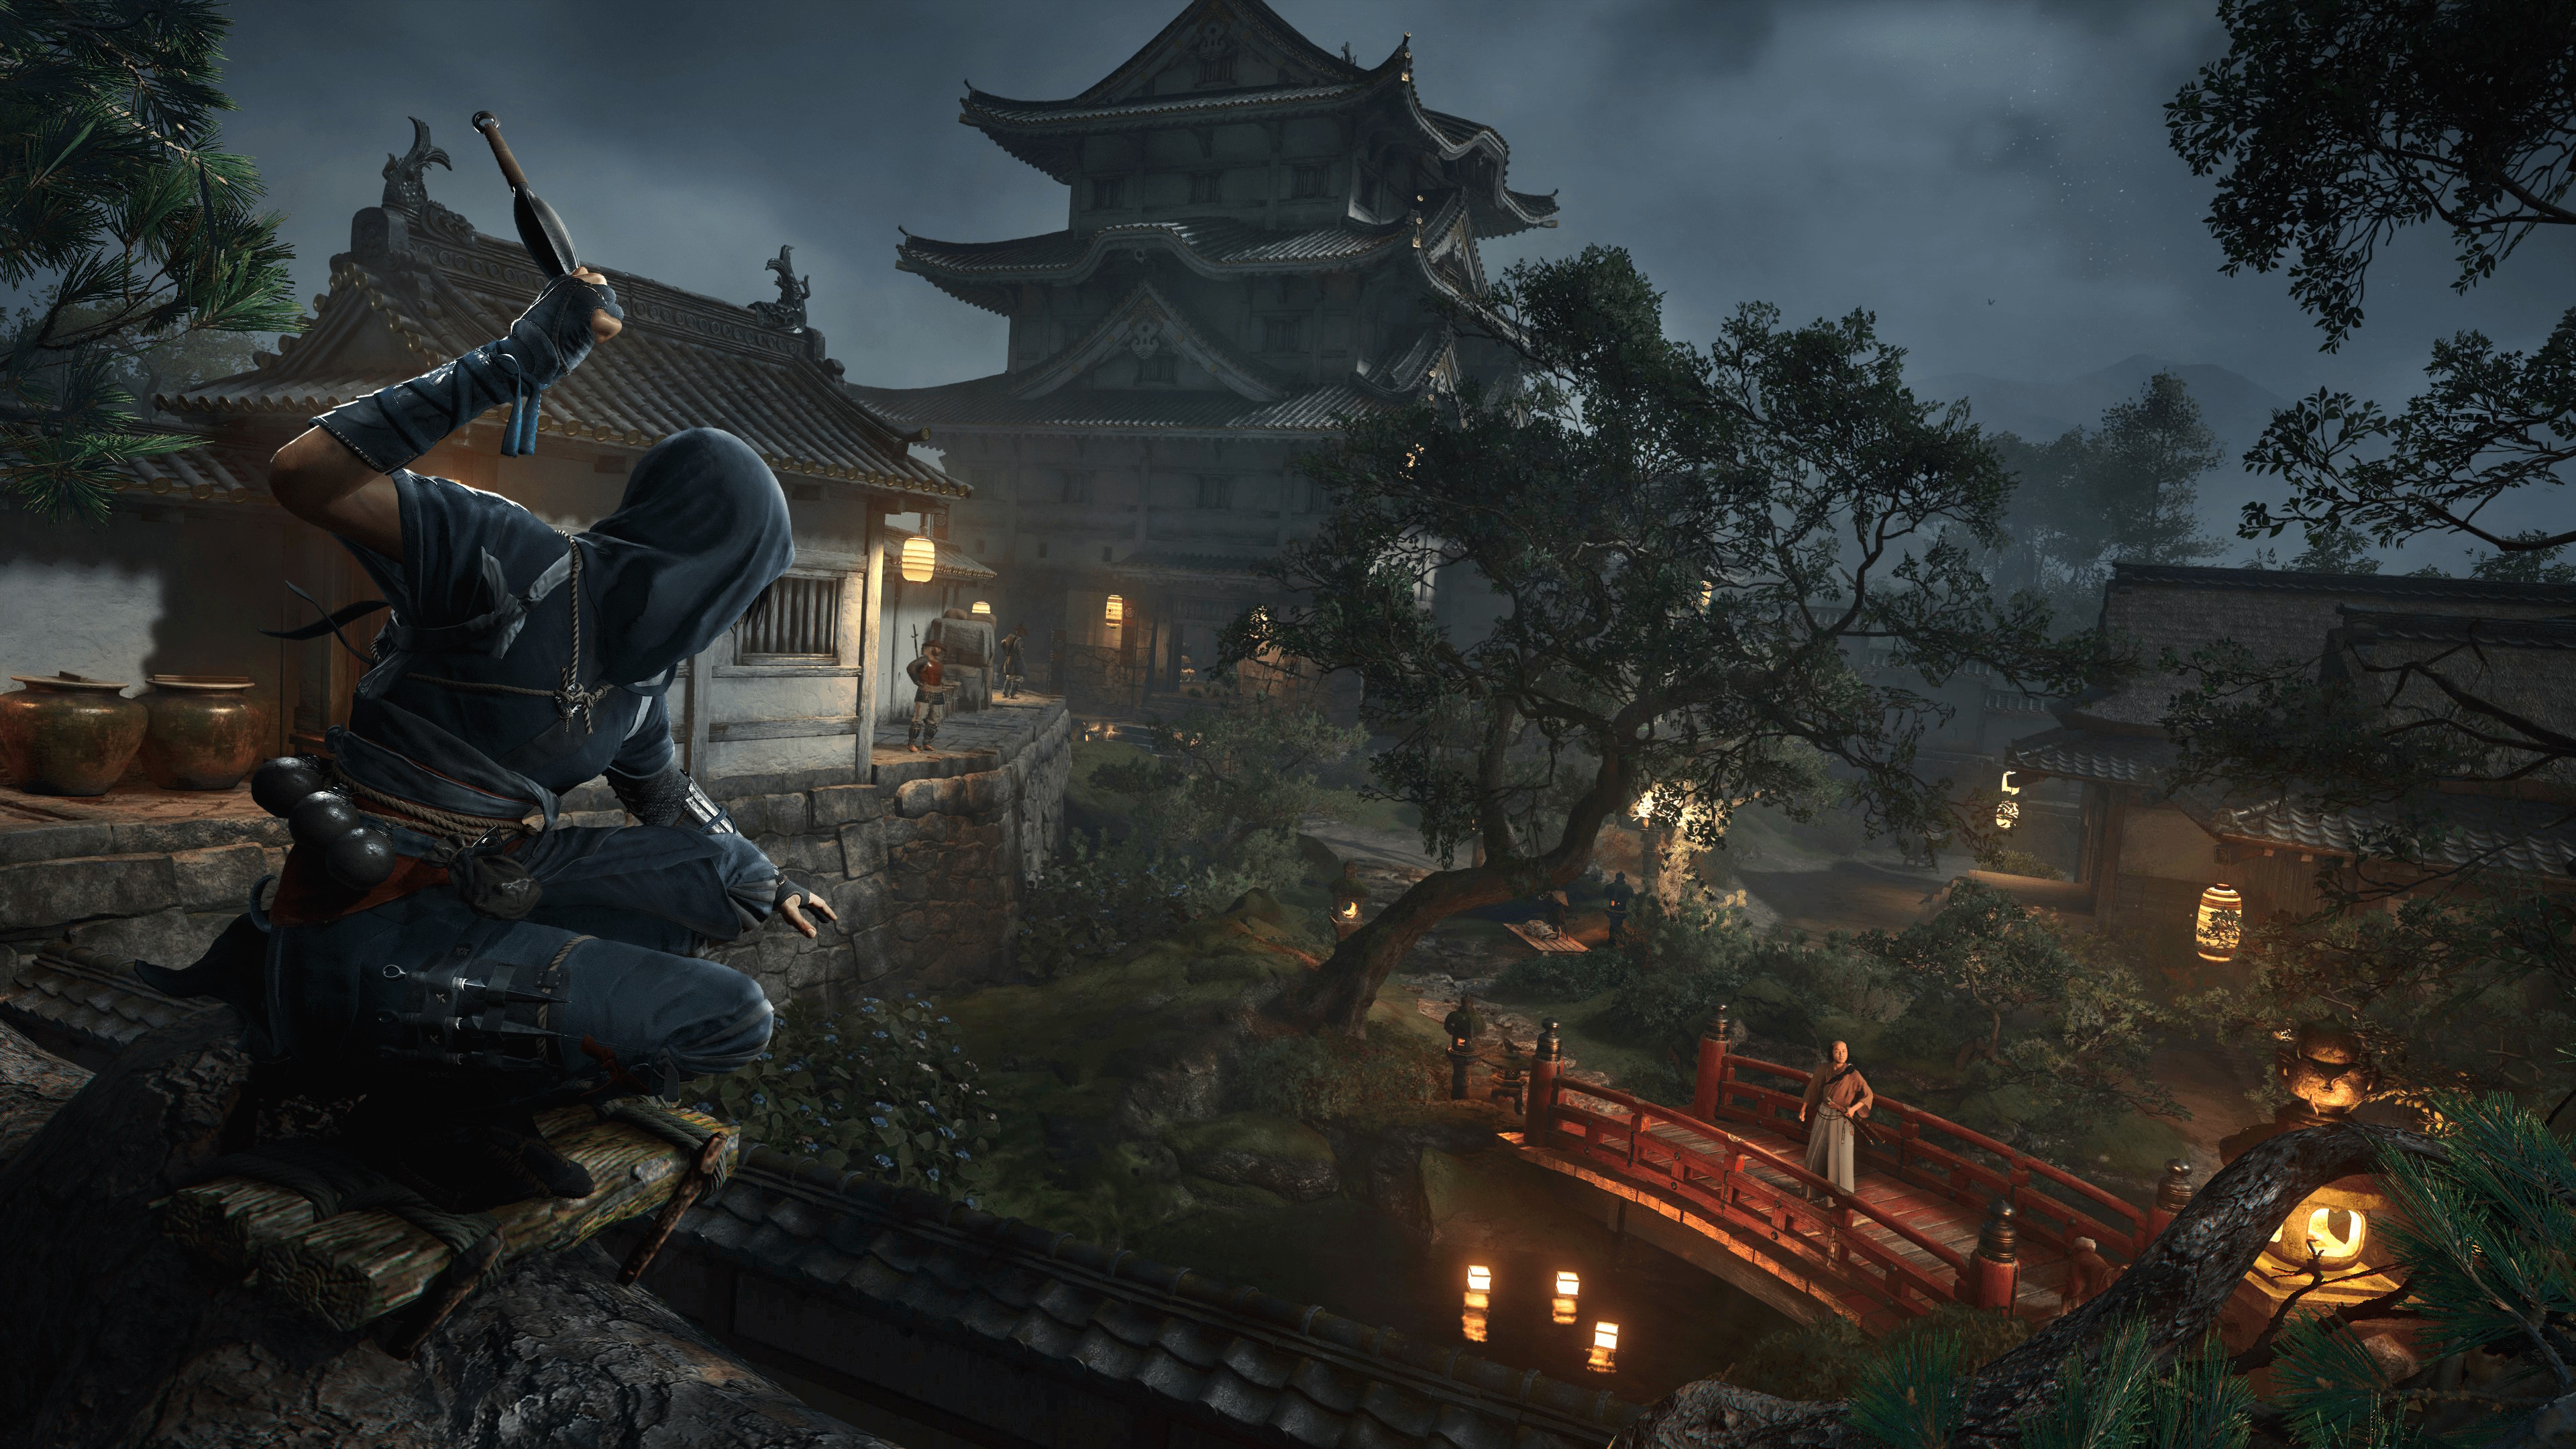 Assassin's Creed Shadows image showing Shinobi female character